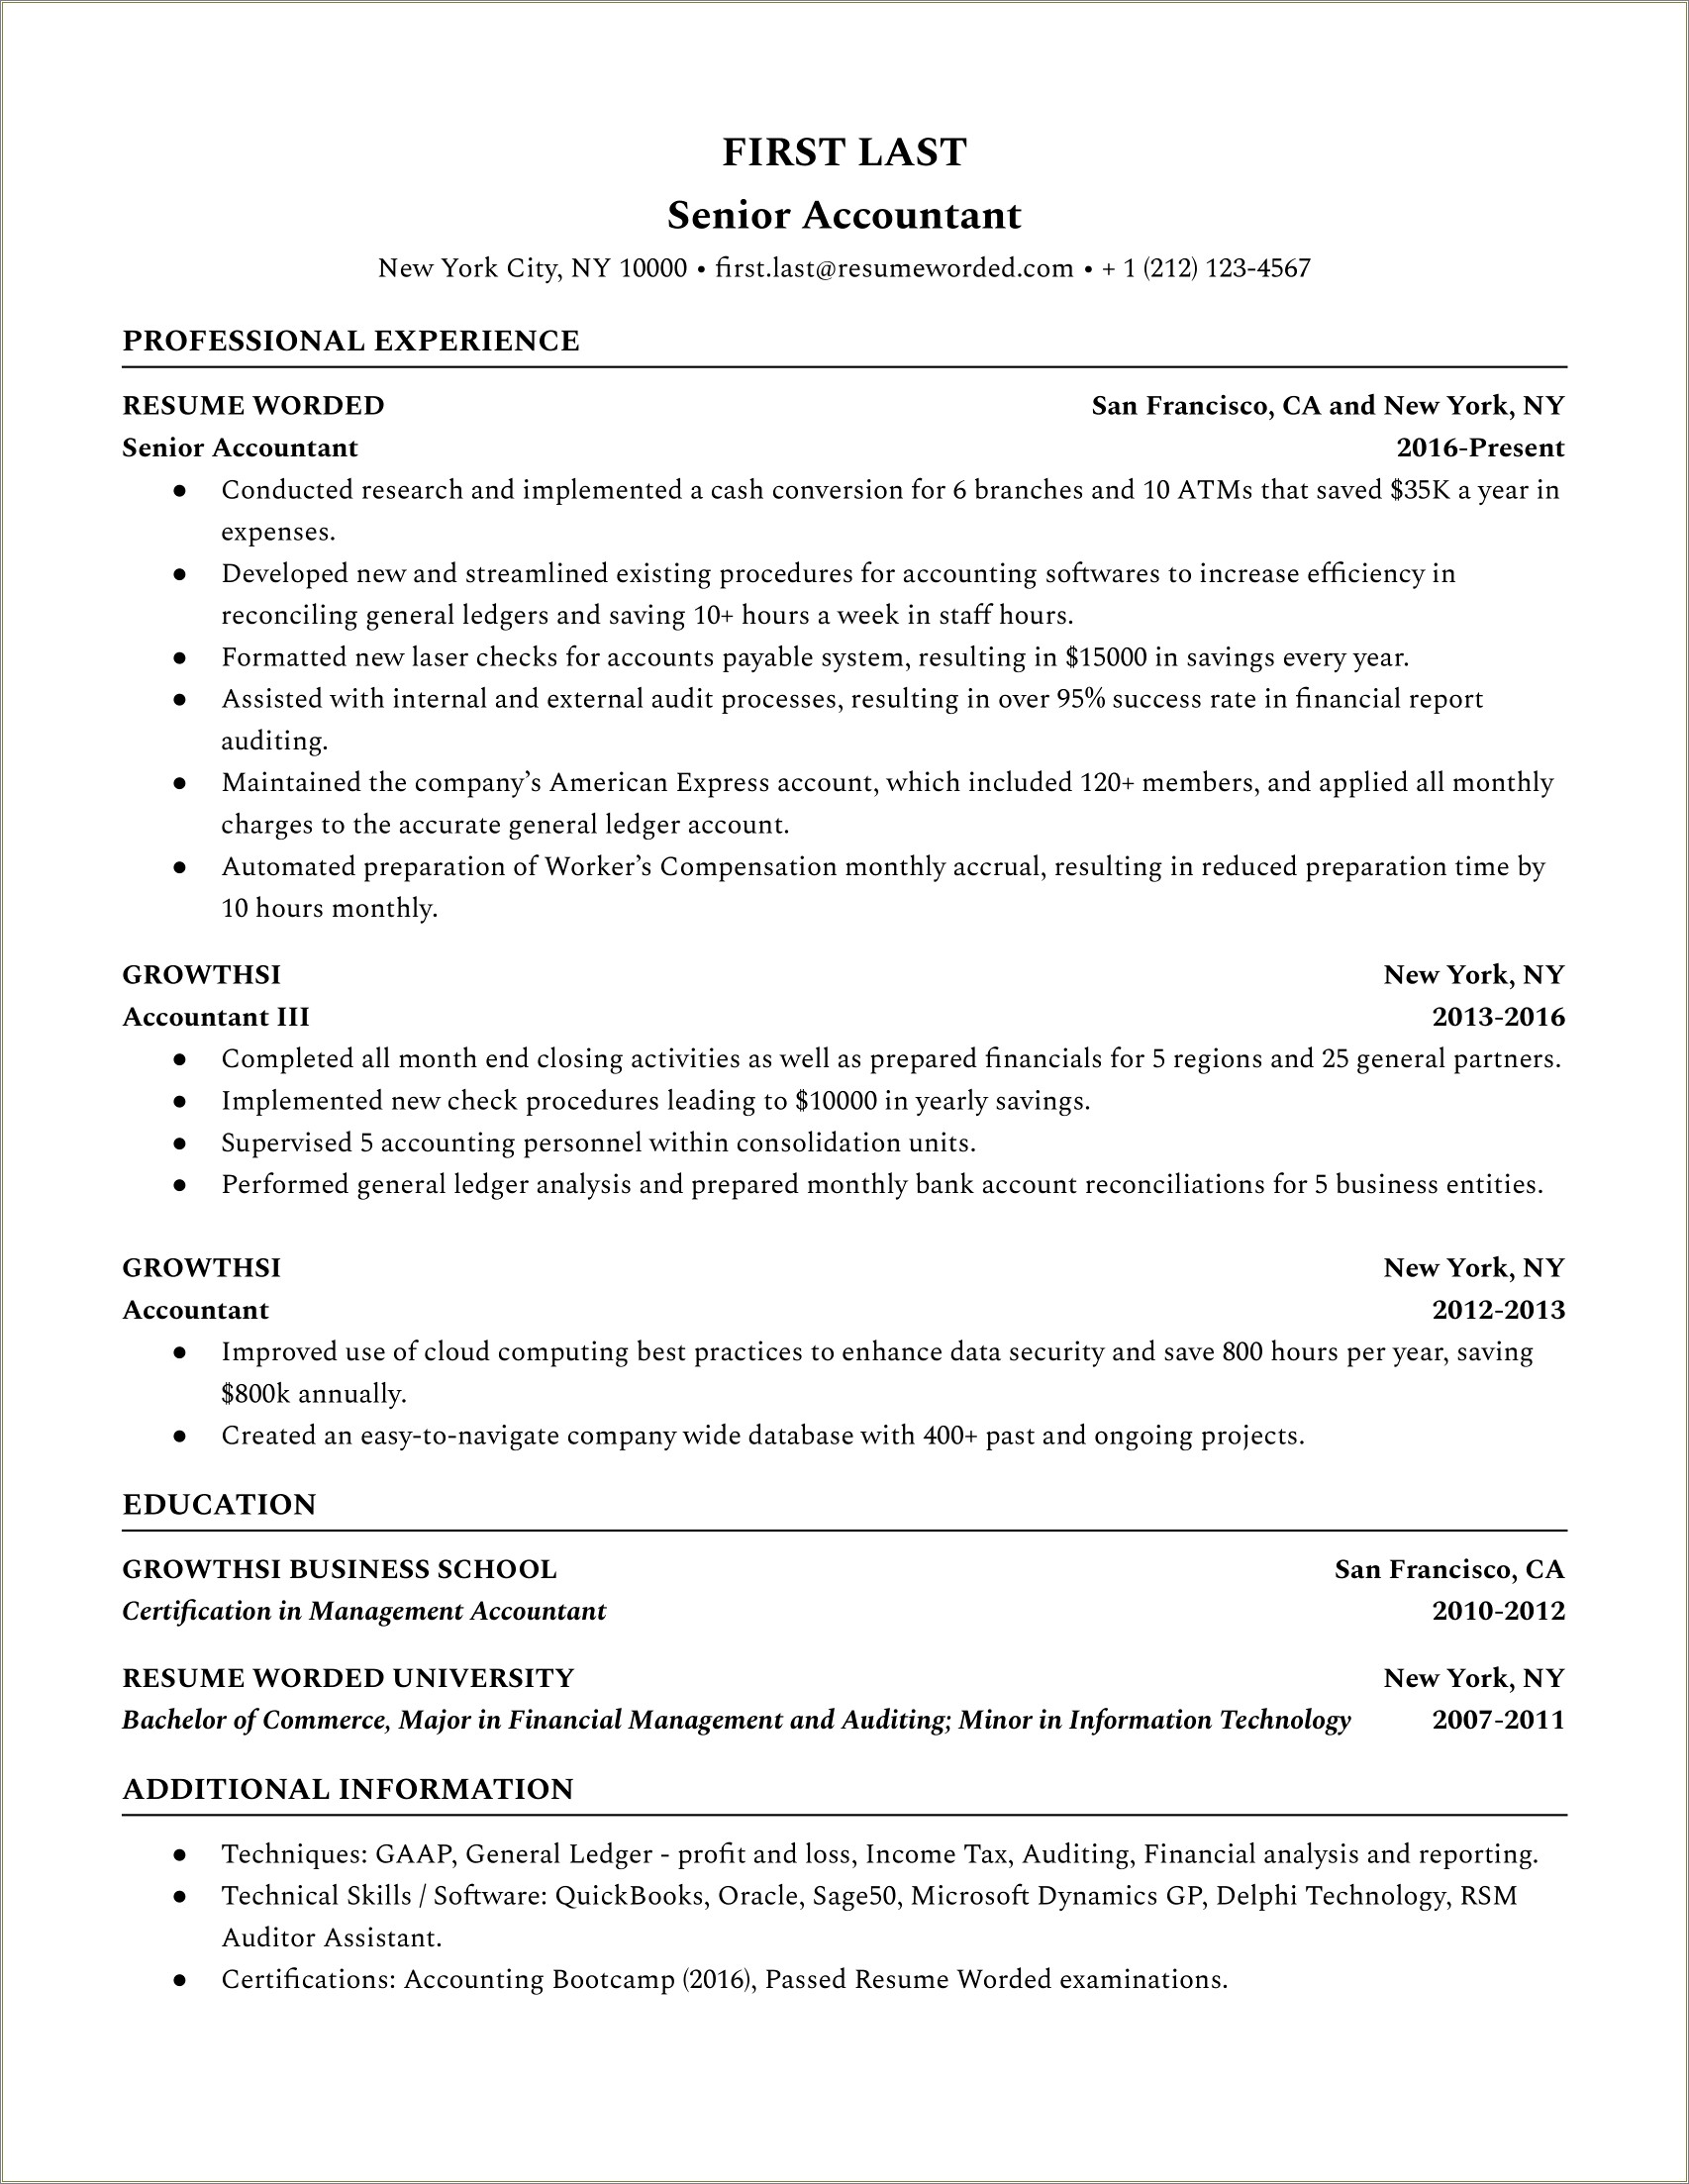 Resume Summary Statement For Accounting Senior